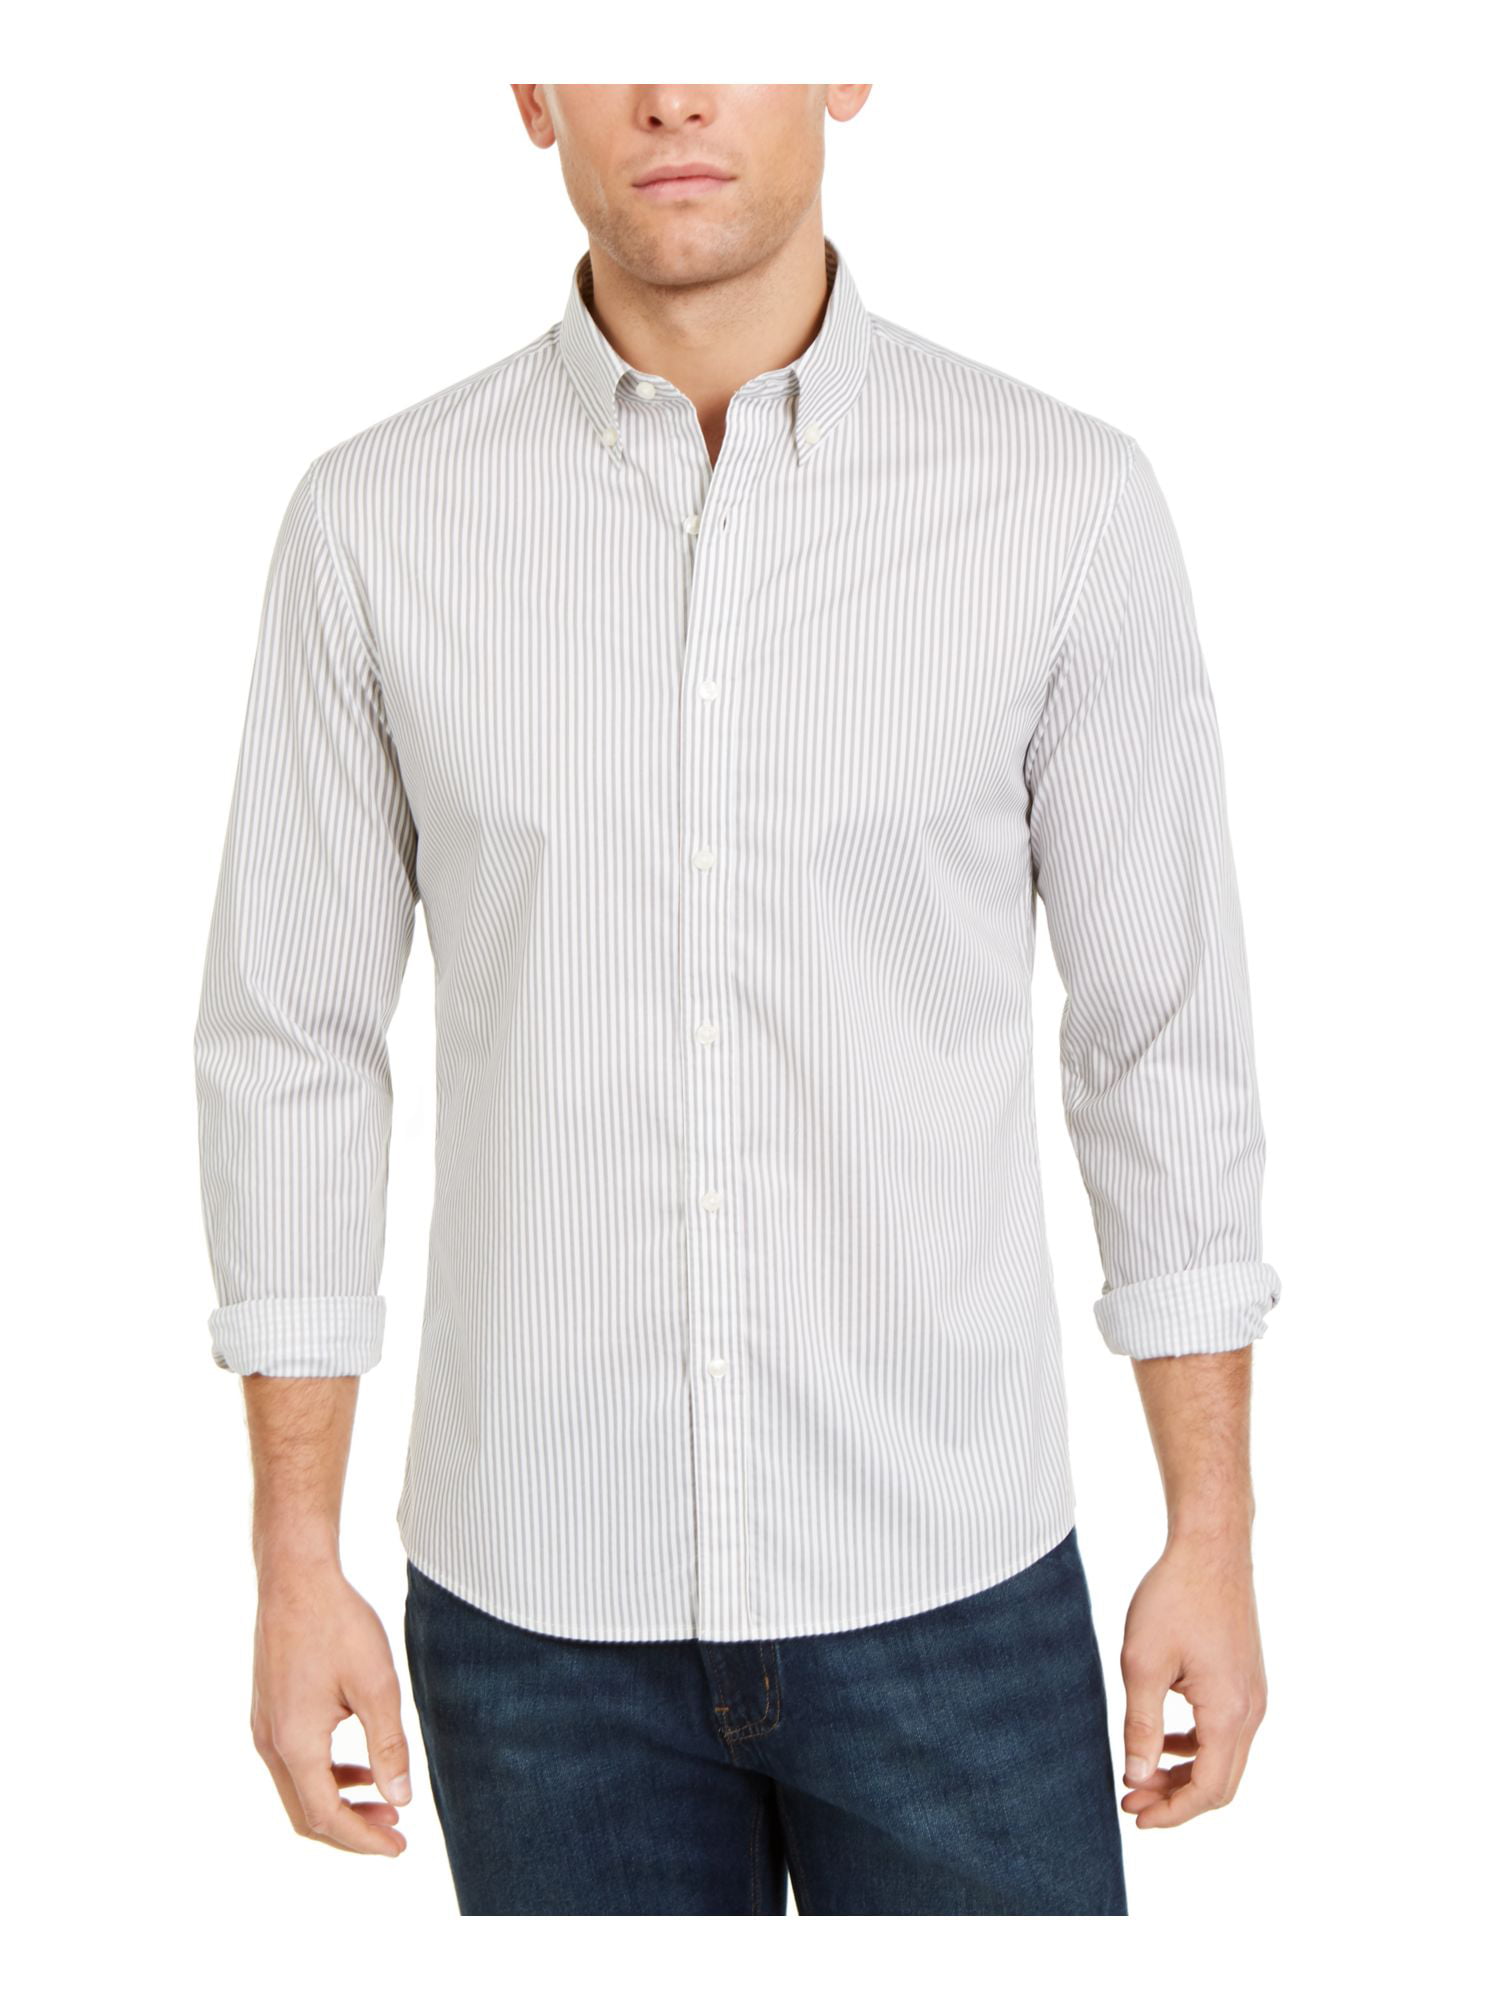 Fashion Shirts Stripe Shirts Michael Kors Stripe Shirt light grey-white flecked casual look 